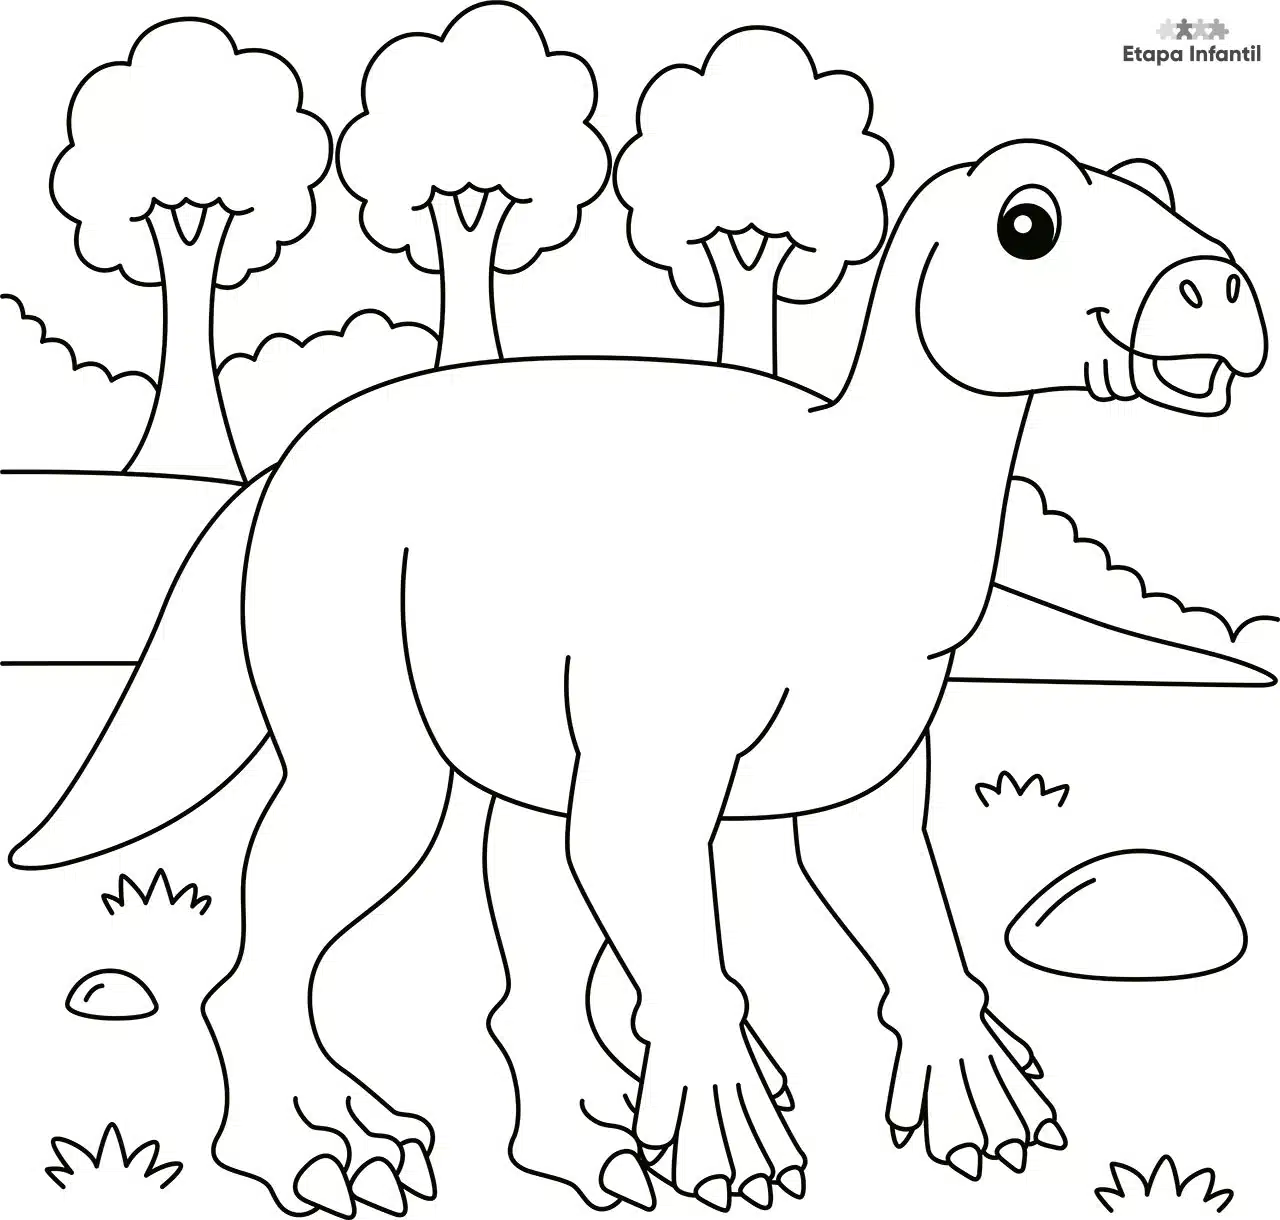 Dibujos de dinosaurios para colorear - Etapa Infantil